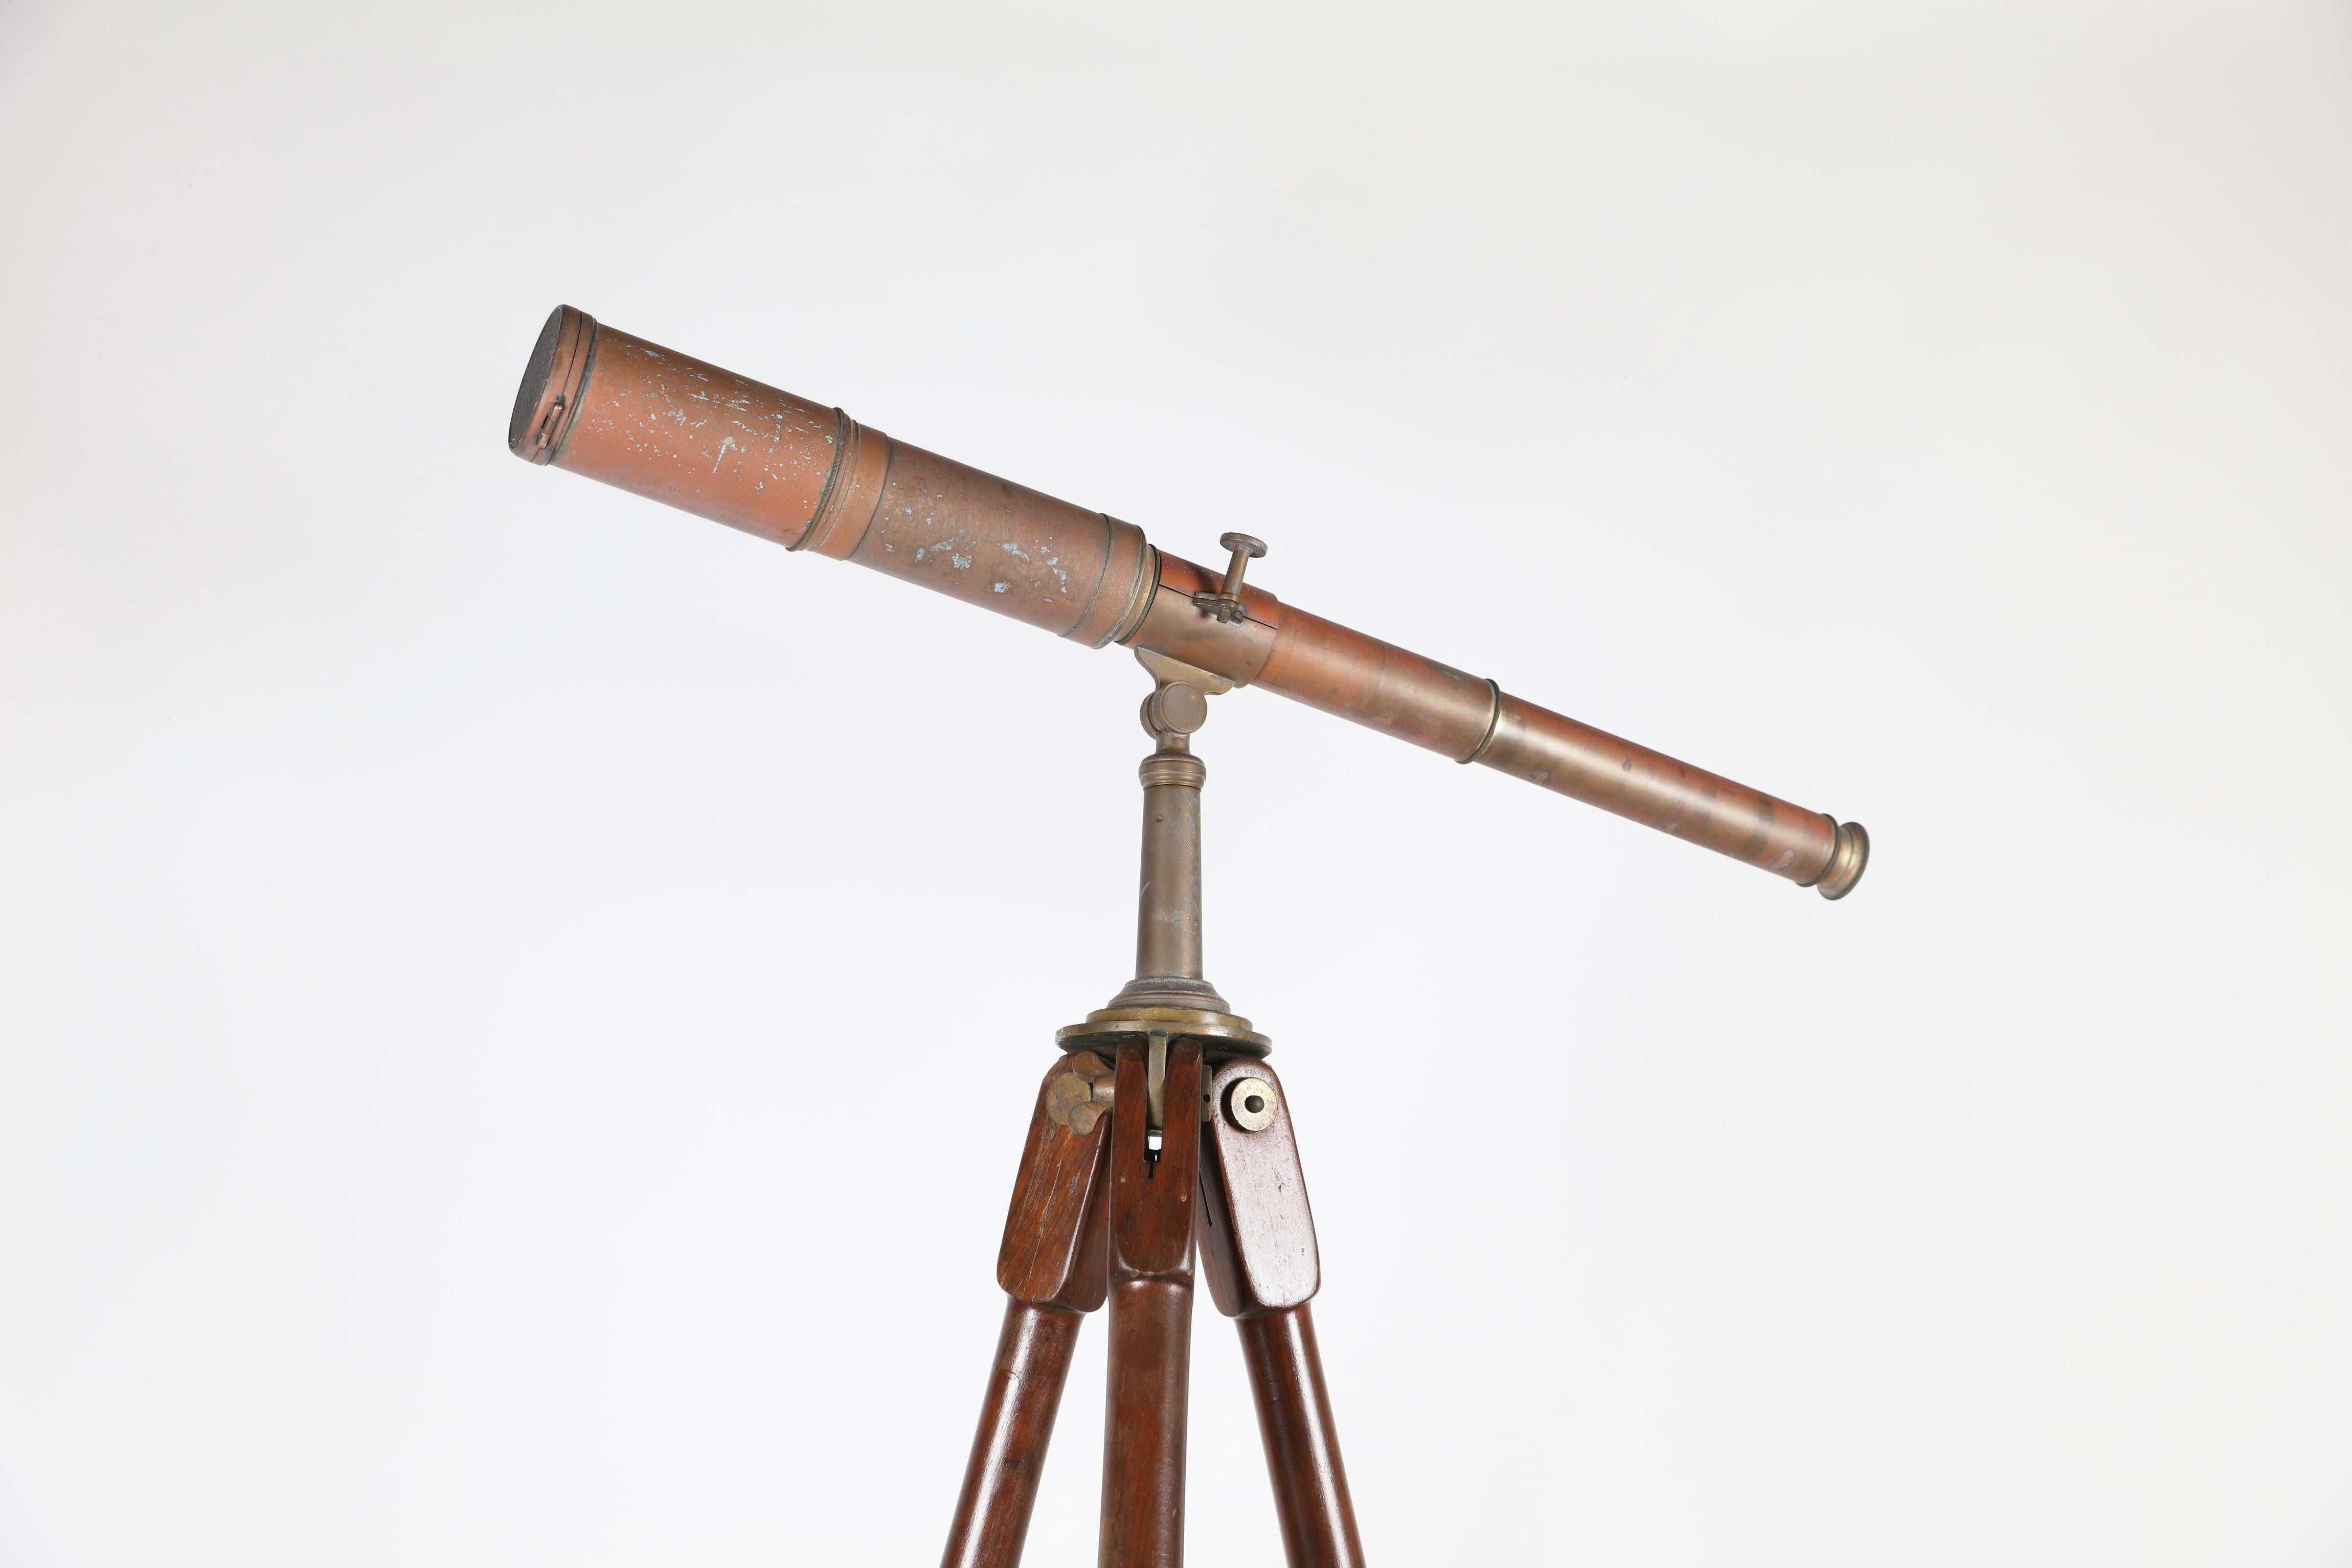 Antique brass telescope on tripod

Measures: 64